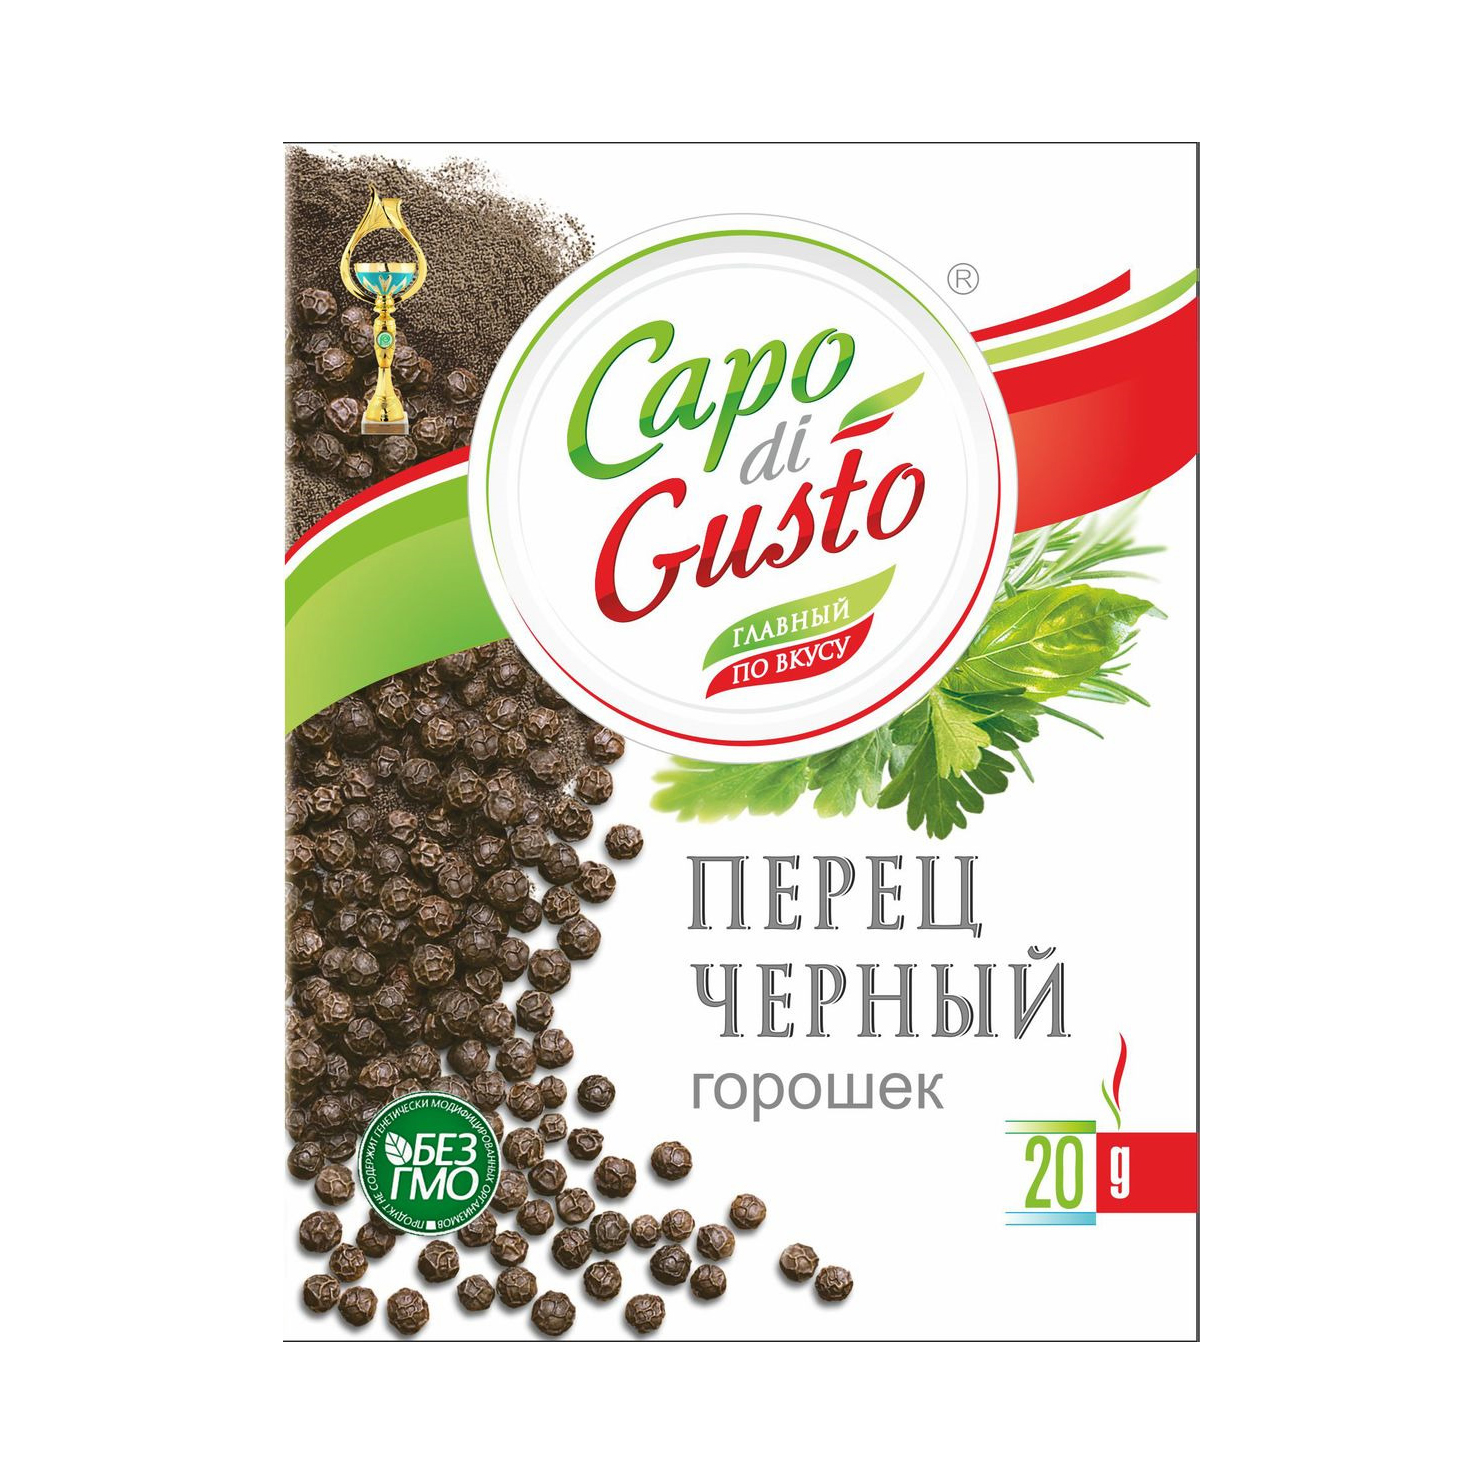 Перец черный горошек Capo di Gusto 20 г - фото 1